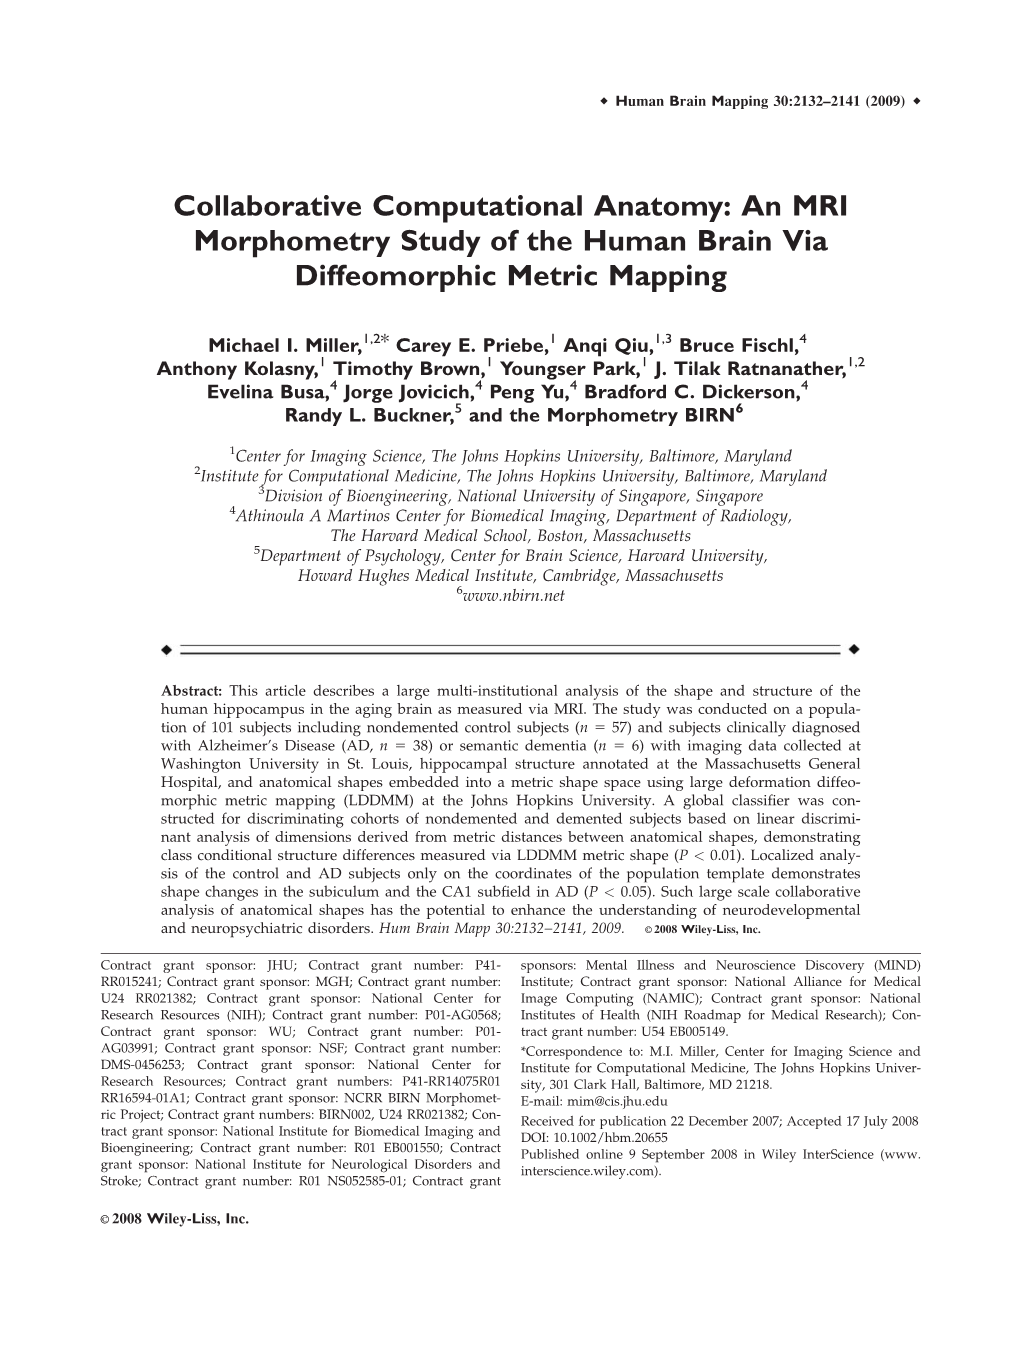 Collaborative Computational Anatomy: an MRI Morphometry Study of the Human Brain Via Diffeomorphic Metric Mapping